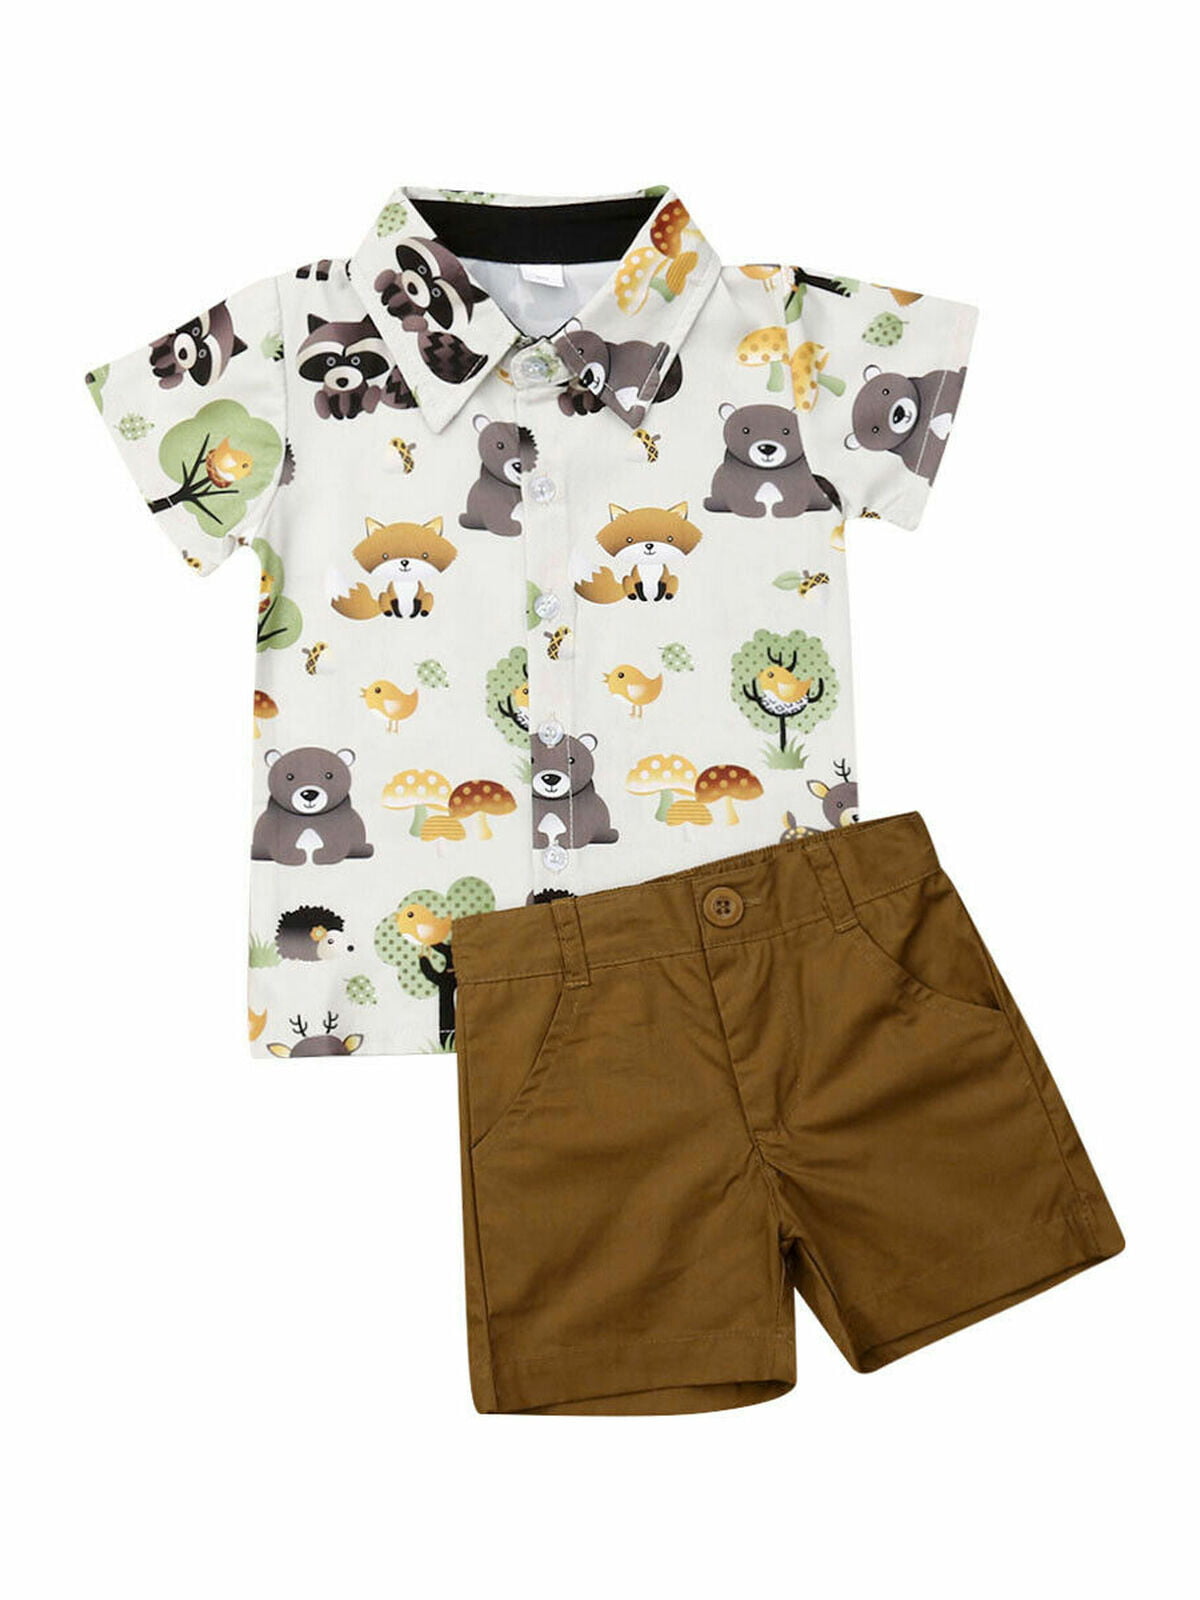 Kehen Kid Clothes Toddler Baby Boy Summer Outfit Mini Boss Short Sleeve T-Shirt Top Shirt Tee 